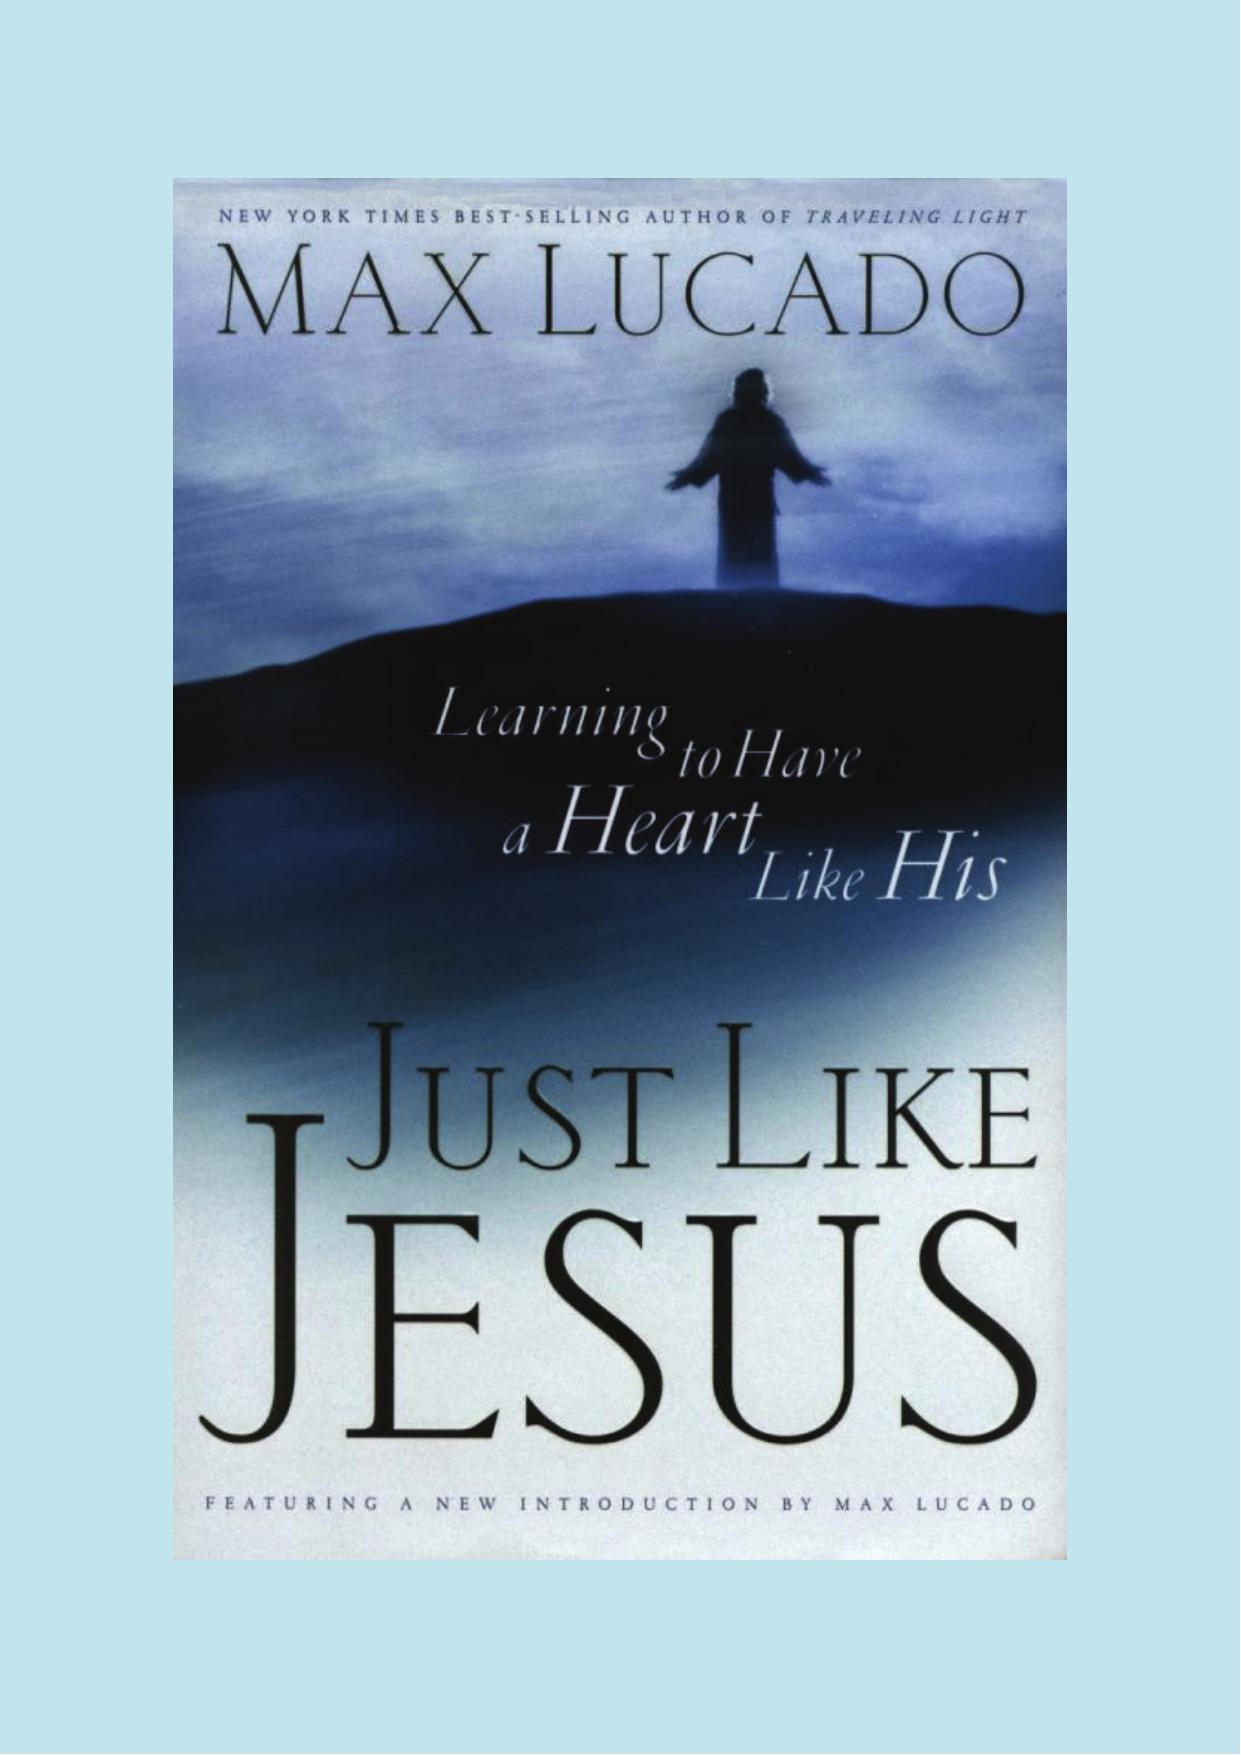 Just Like Jesus by Max Lucado